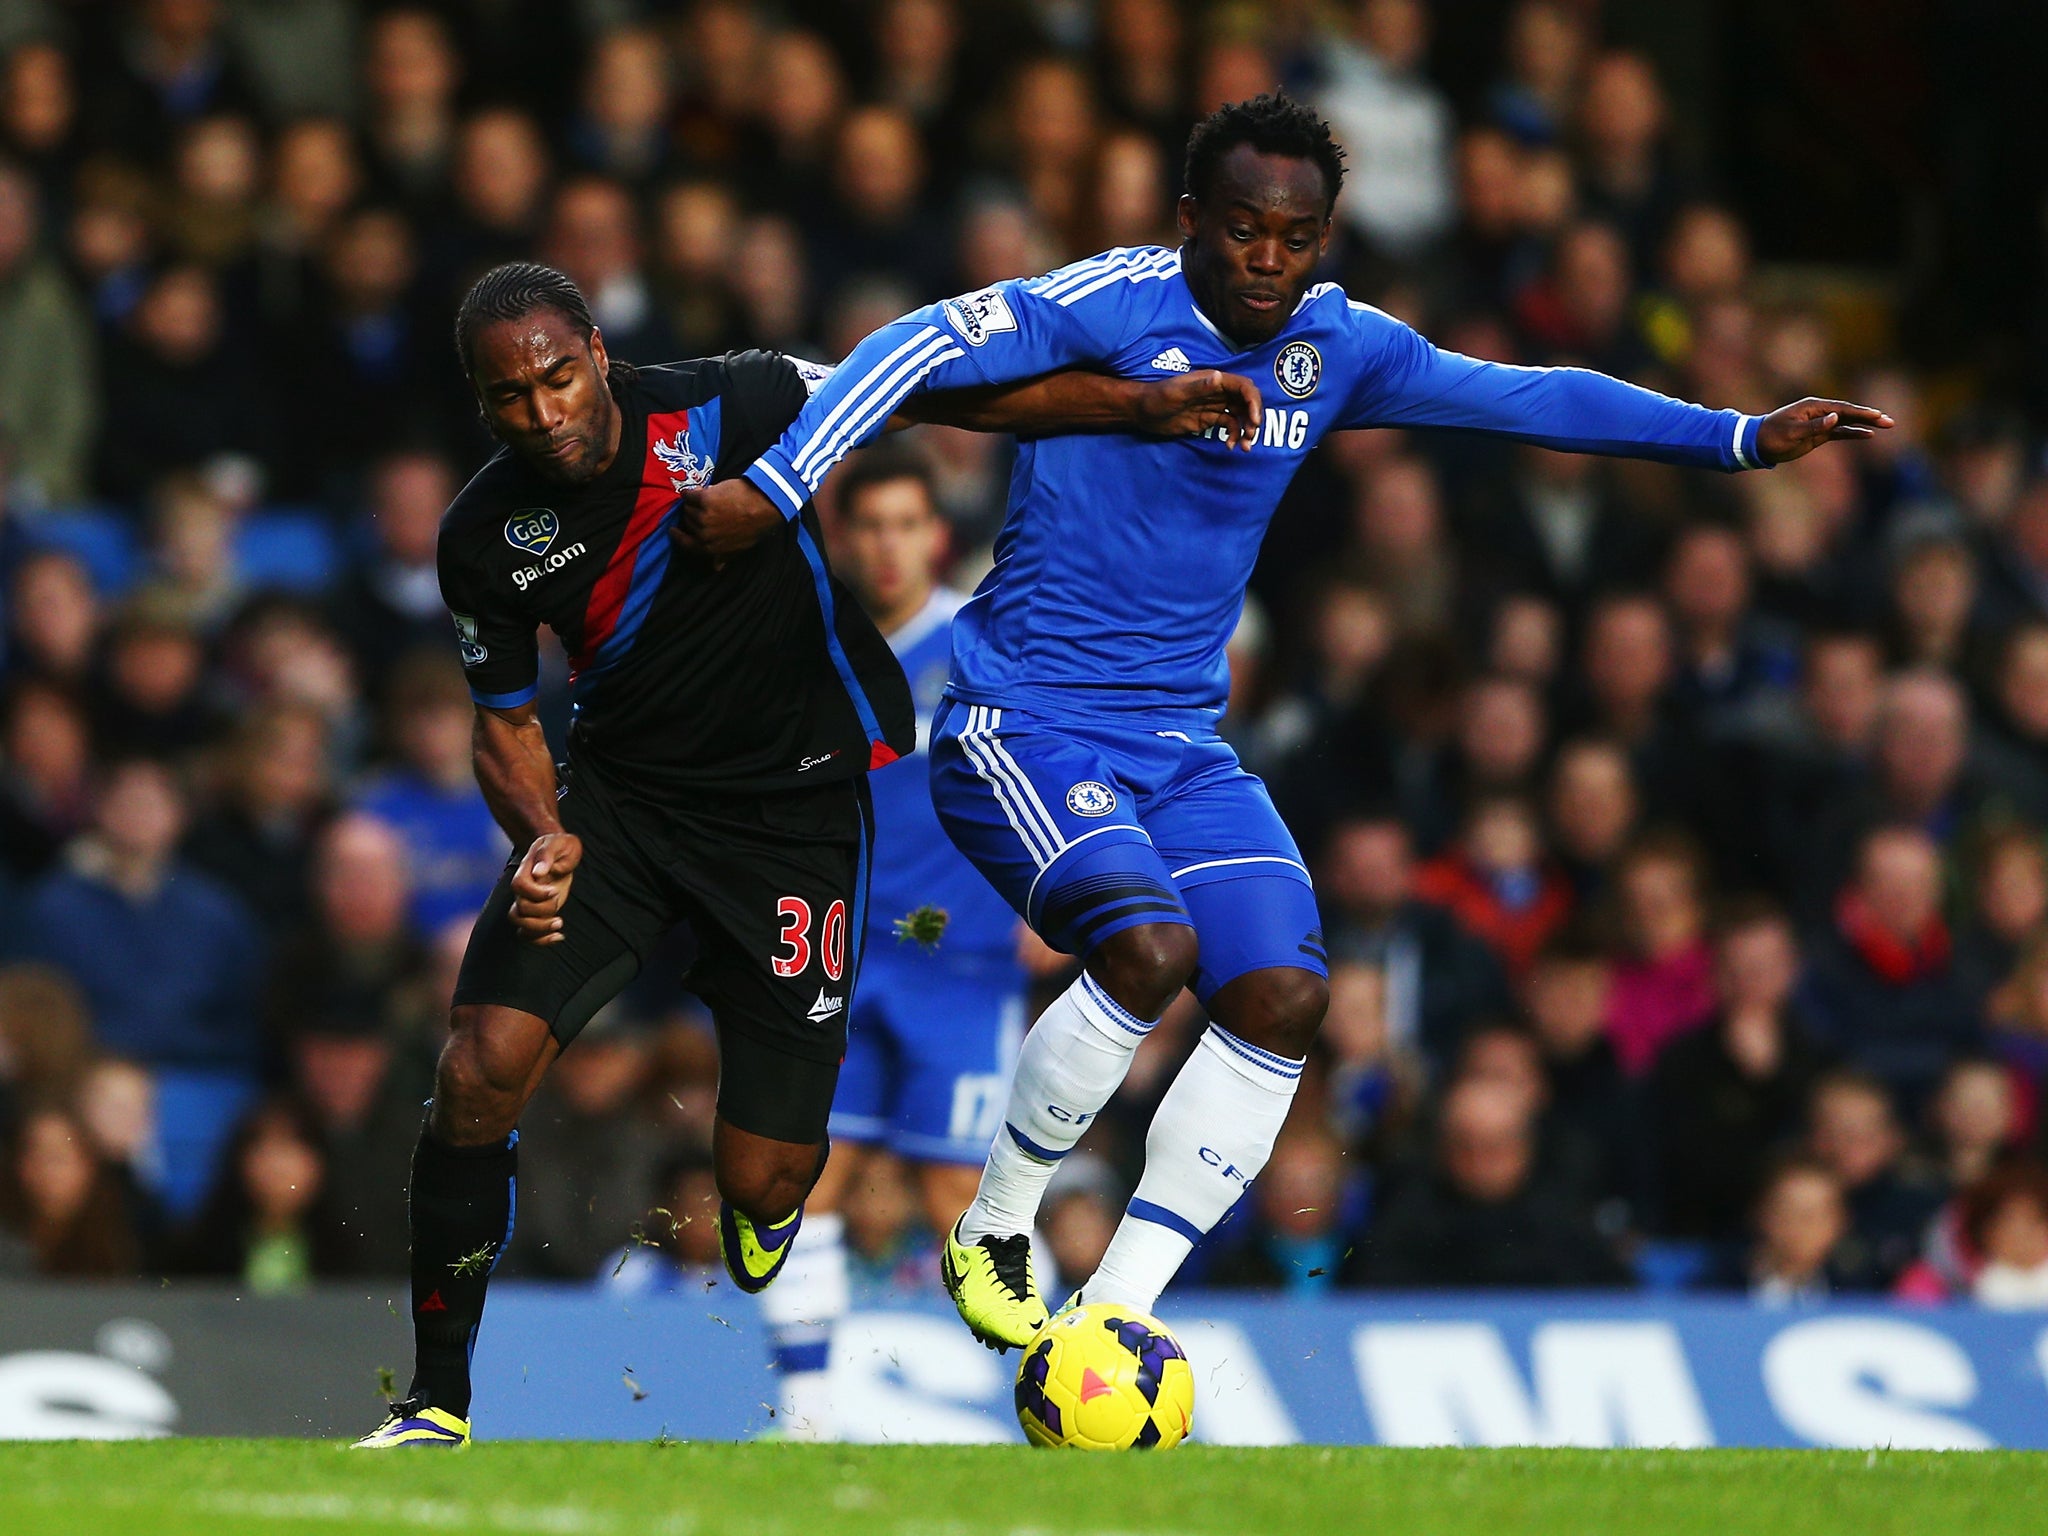 Chelsea midfielder Michael Essien has been recalled for the Derby clash